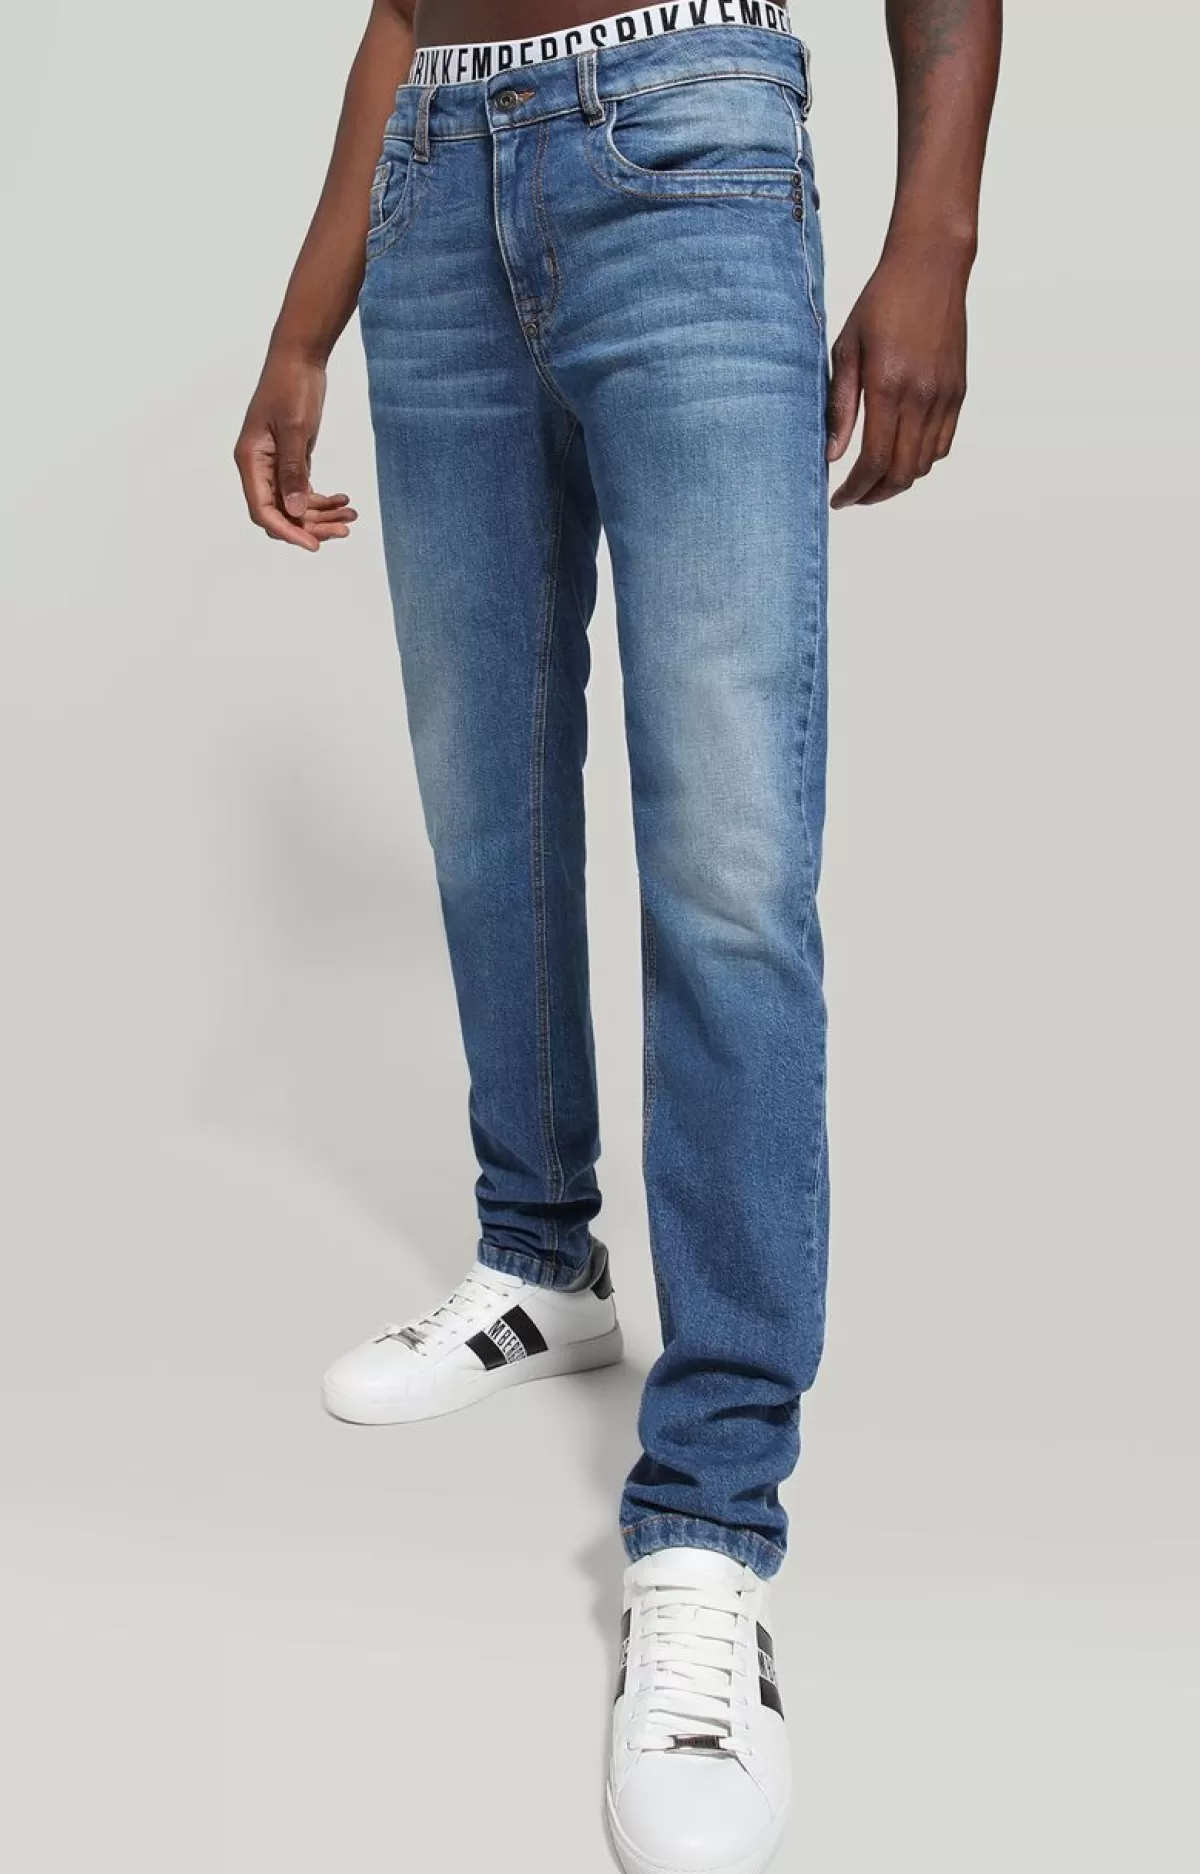 Bikkembergs Slim Fit Men'S Jeans - Stretch Denim Blue Denim Online